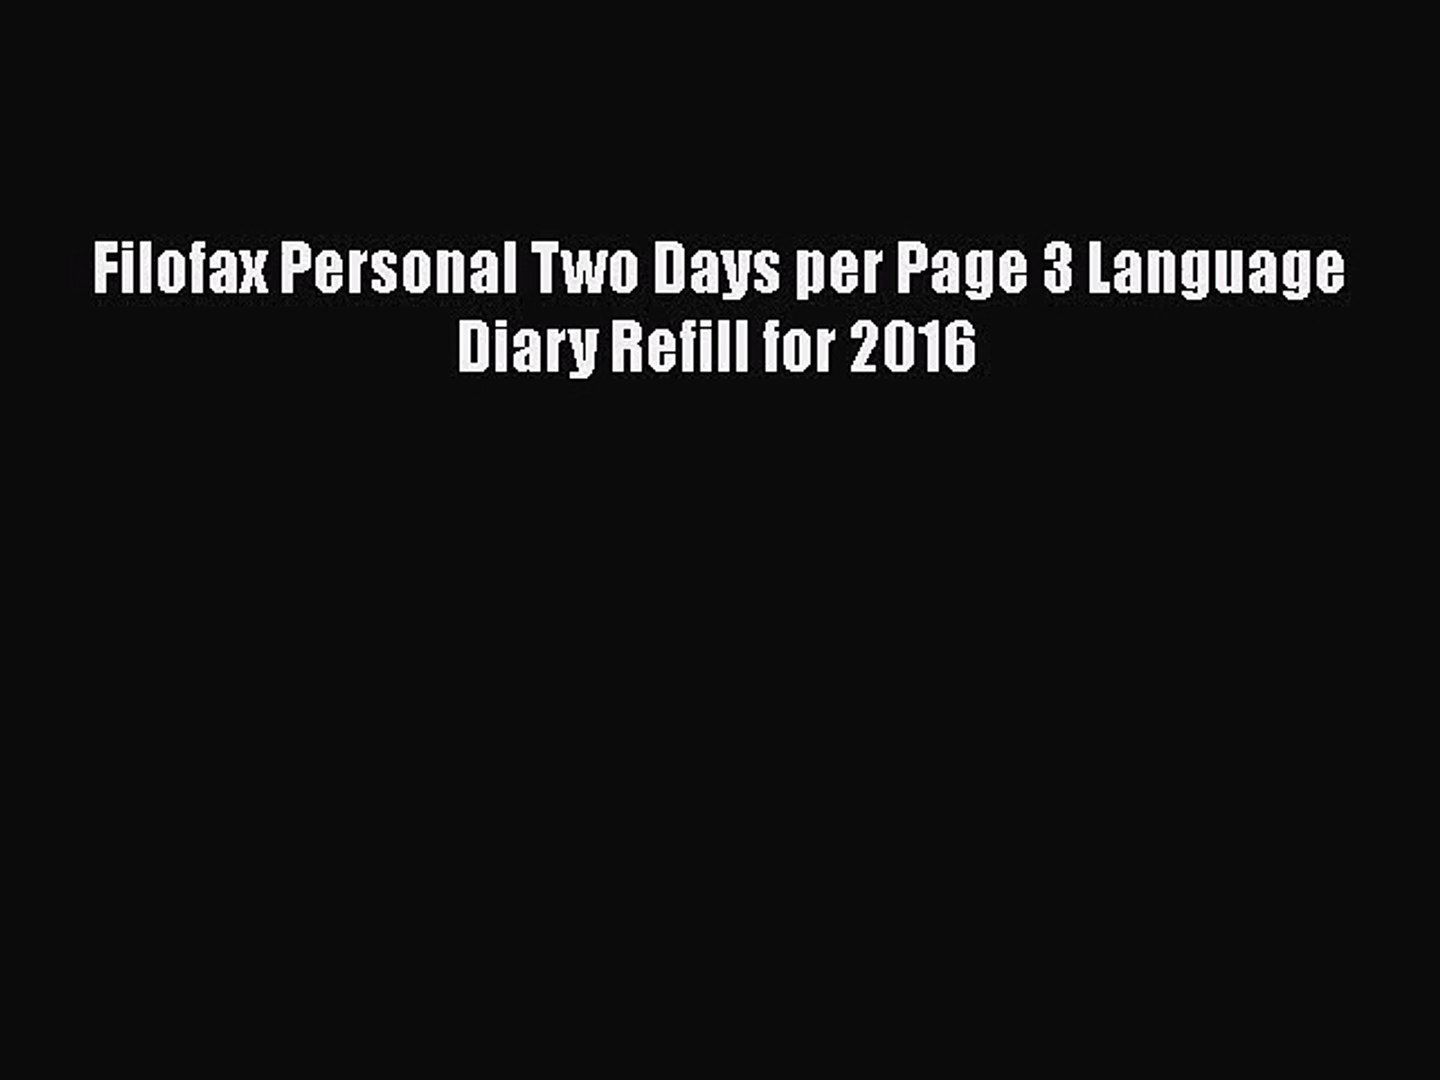 PDF Download] Filofax Personal Two Days per Page 3 Language Diary ...